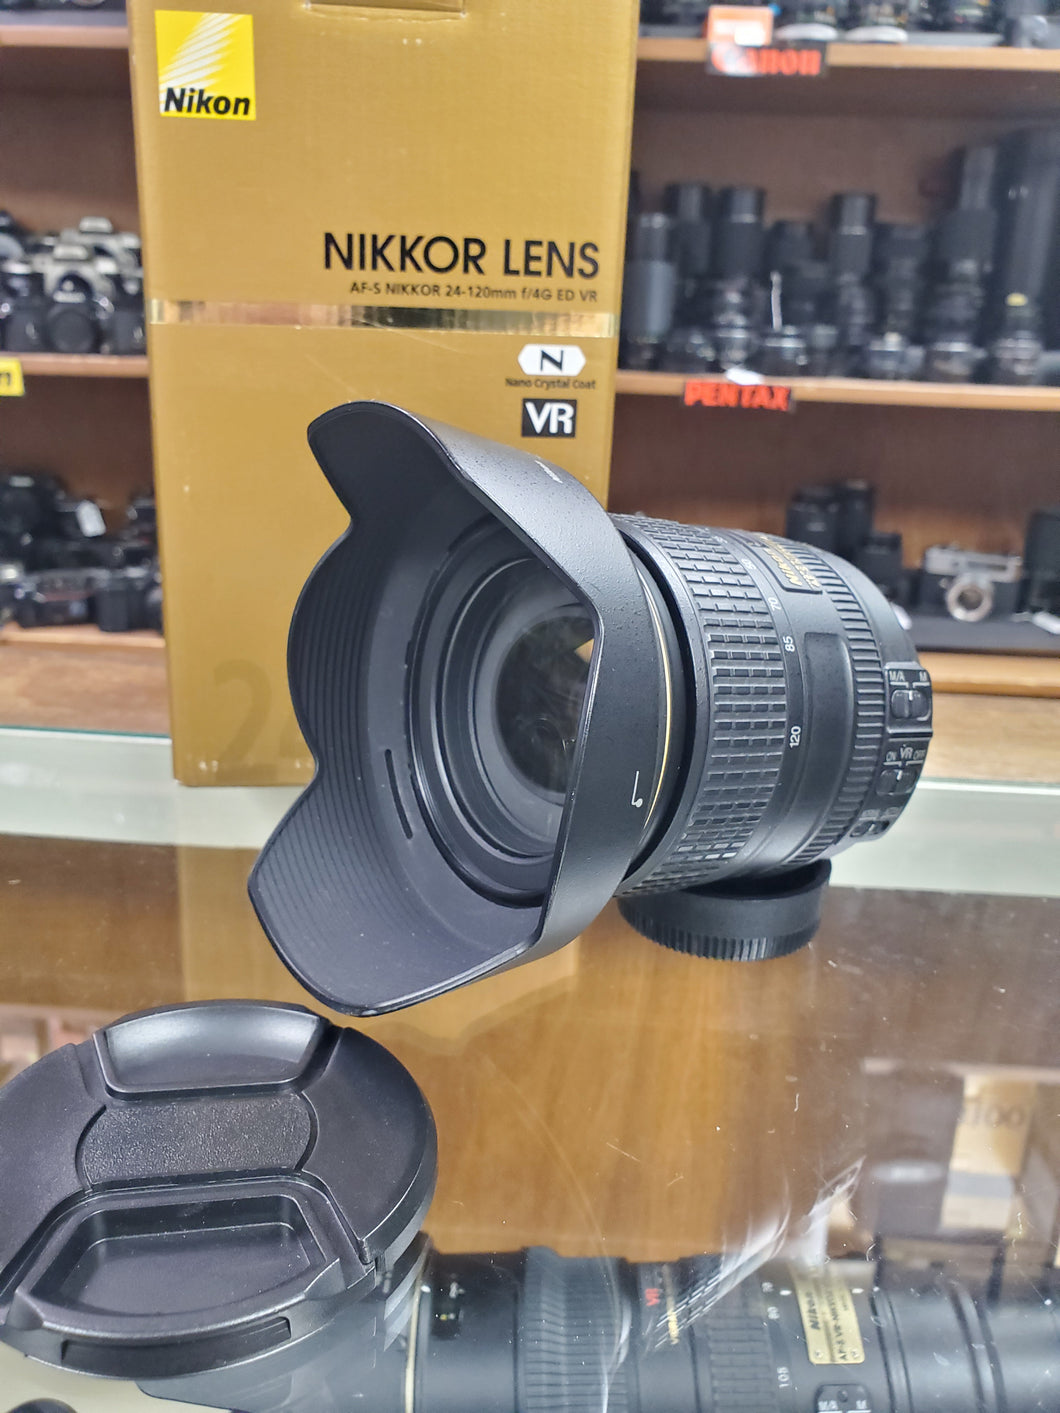 AF-S Nikon 24-120mm f/4G ED VR - Like new - Condition 10/10